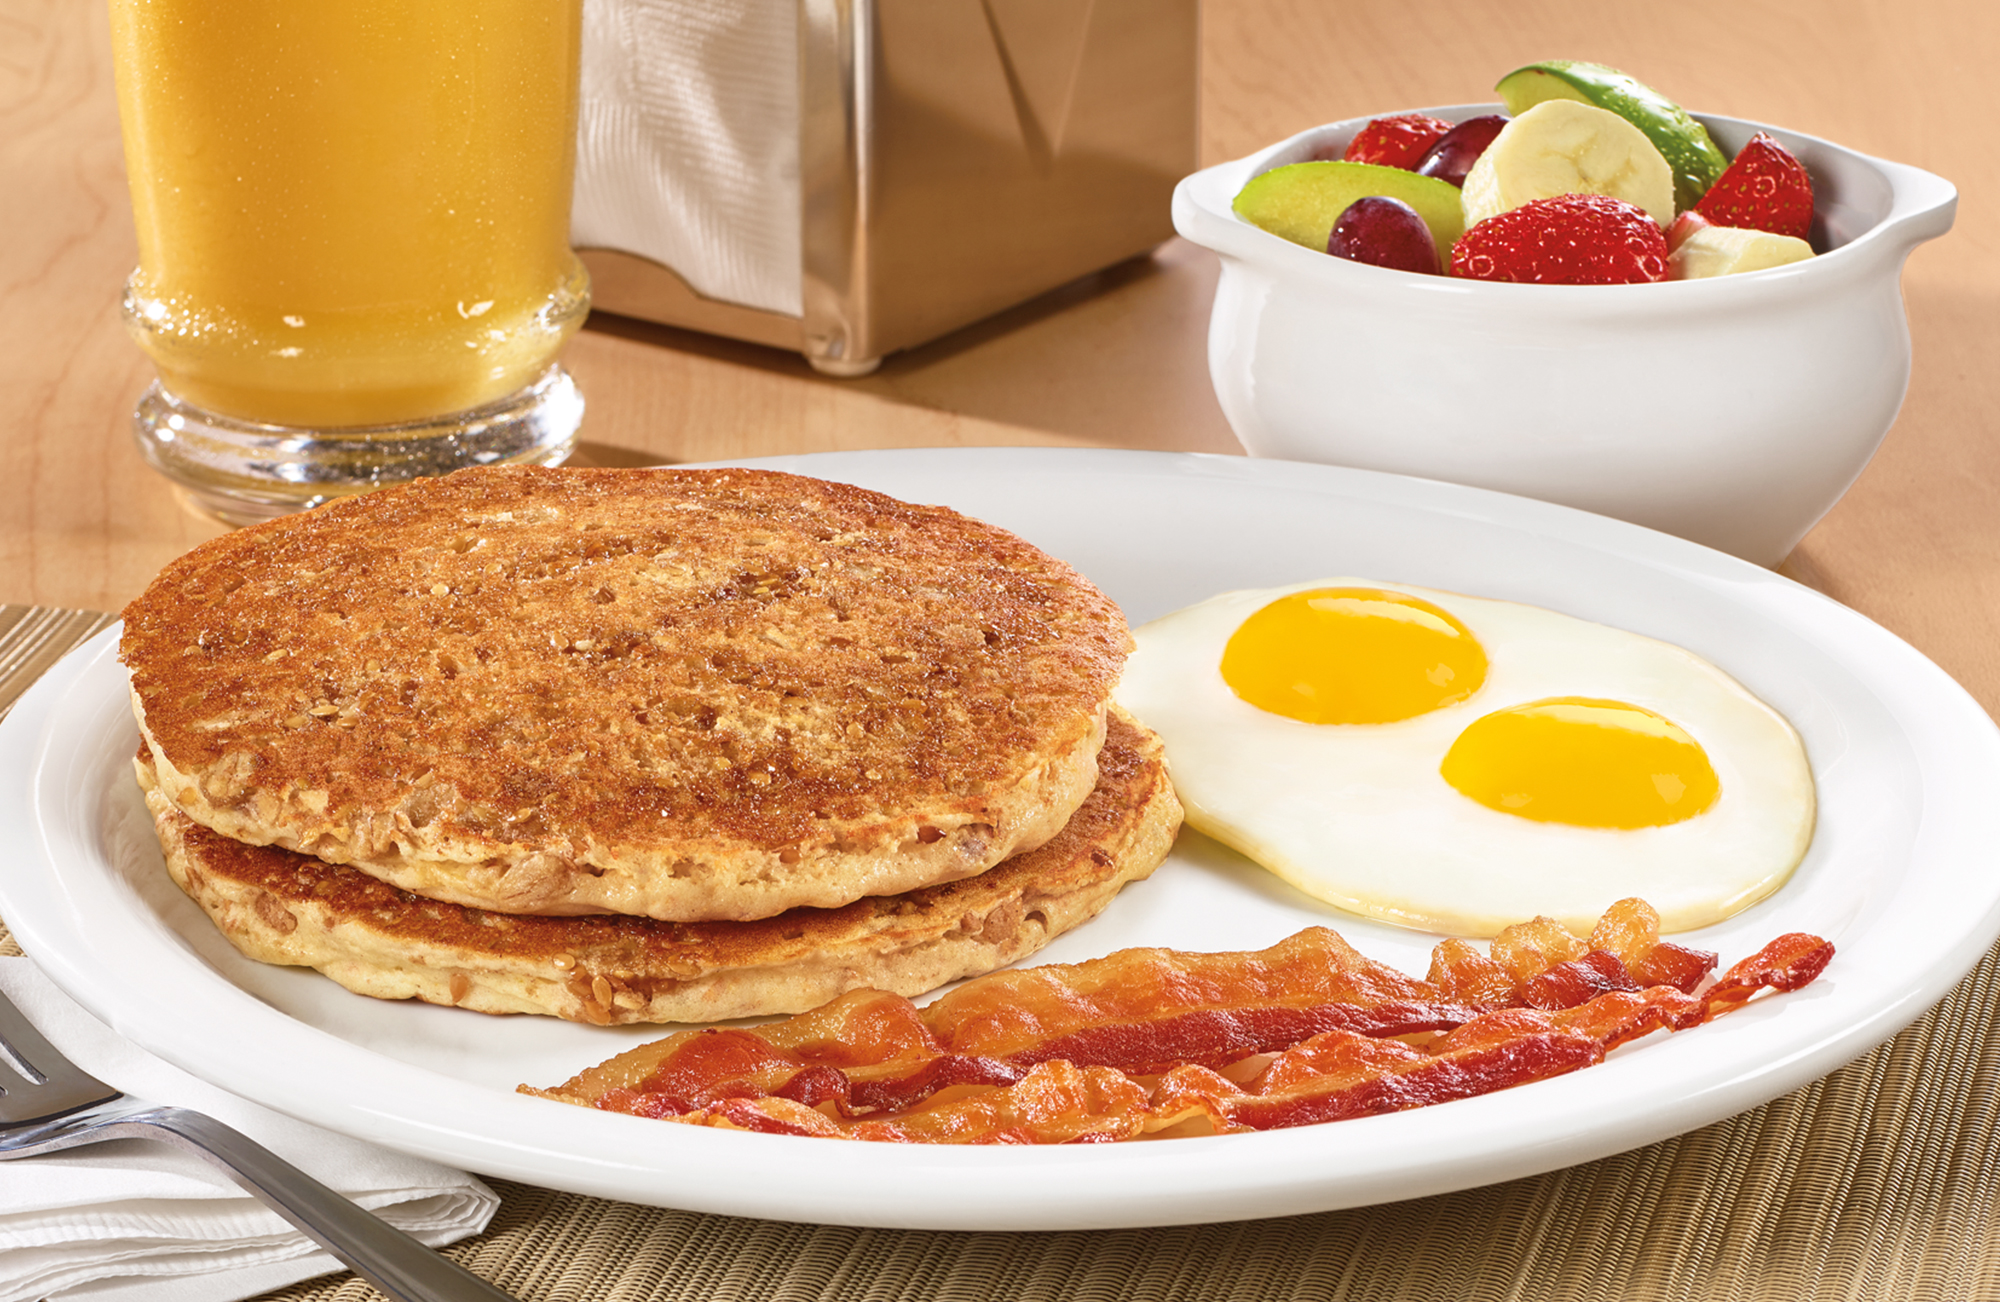 Denny's 9 Grain Pancakes Recipe - Find Vegetarian Recipes